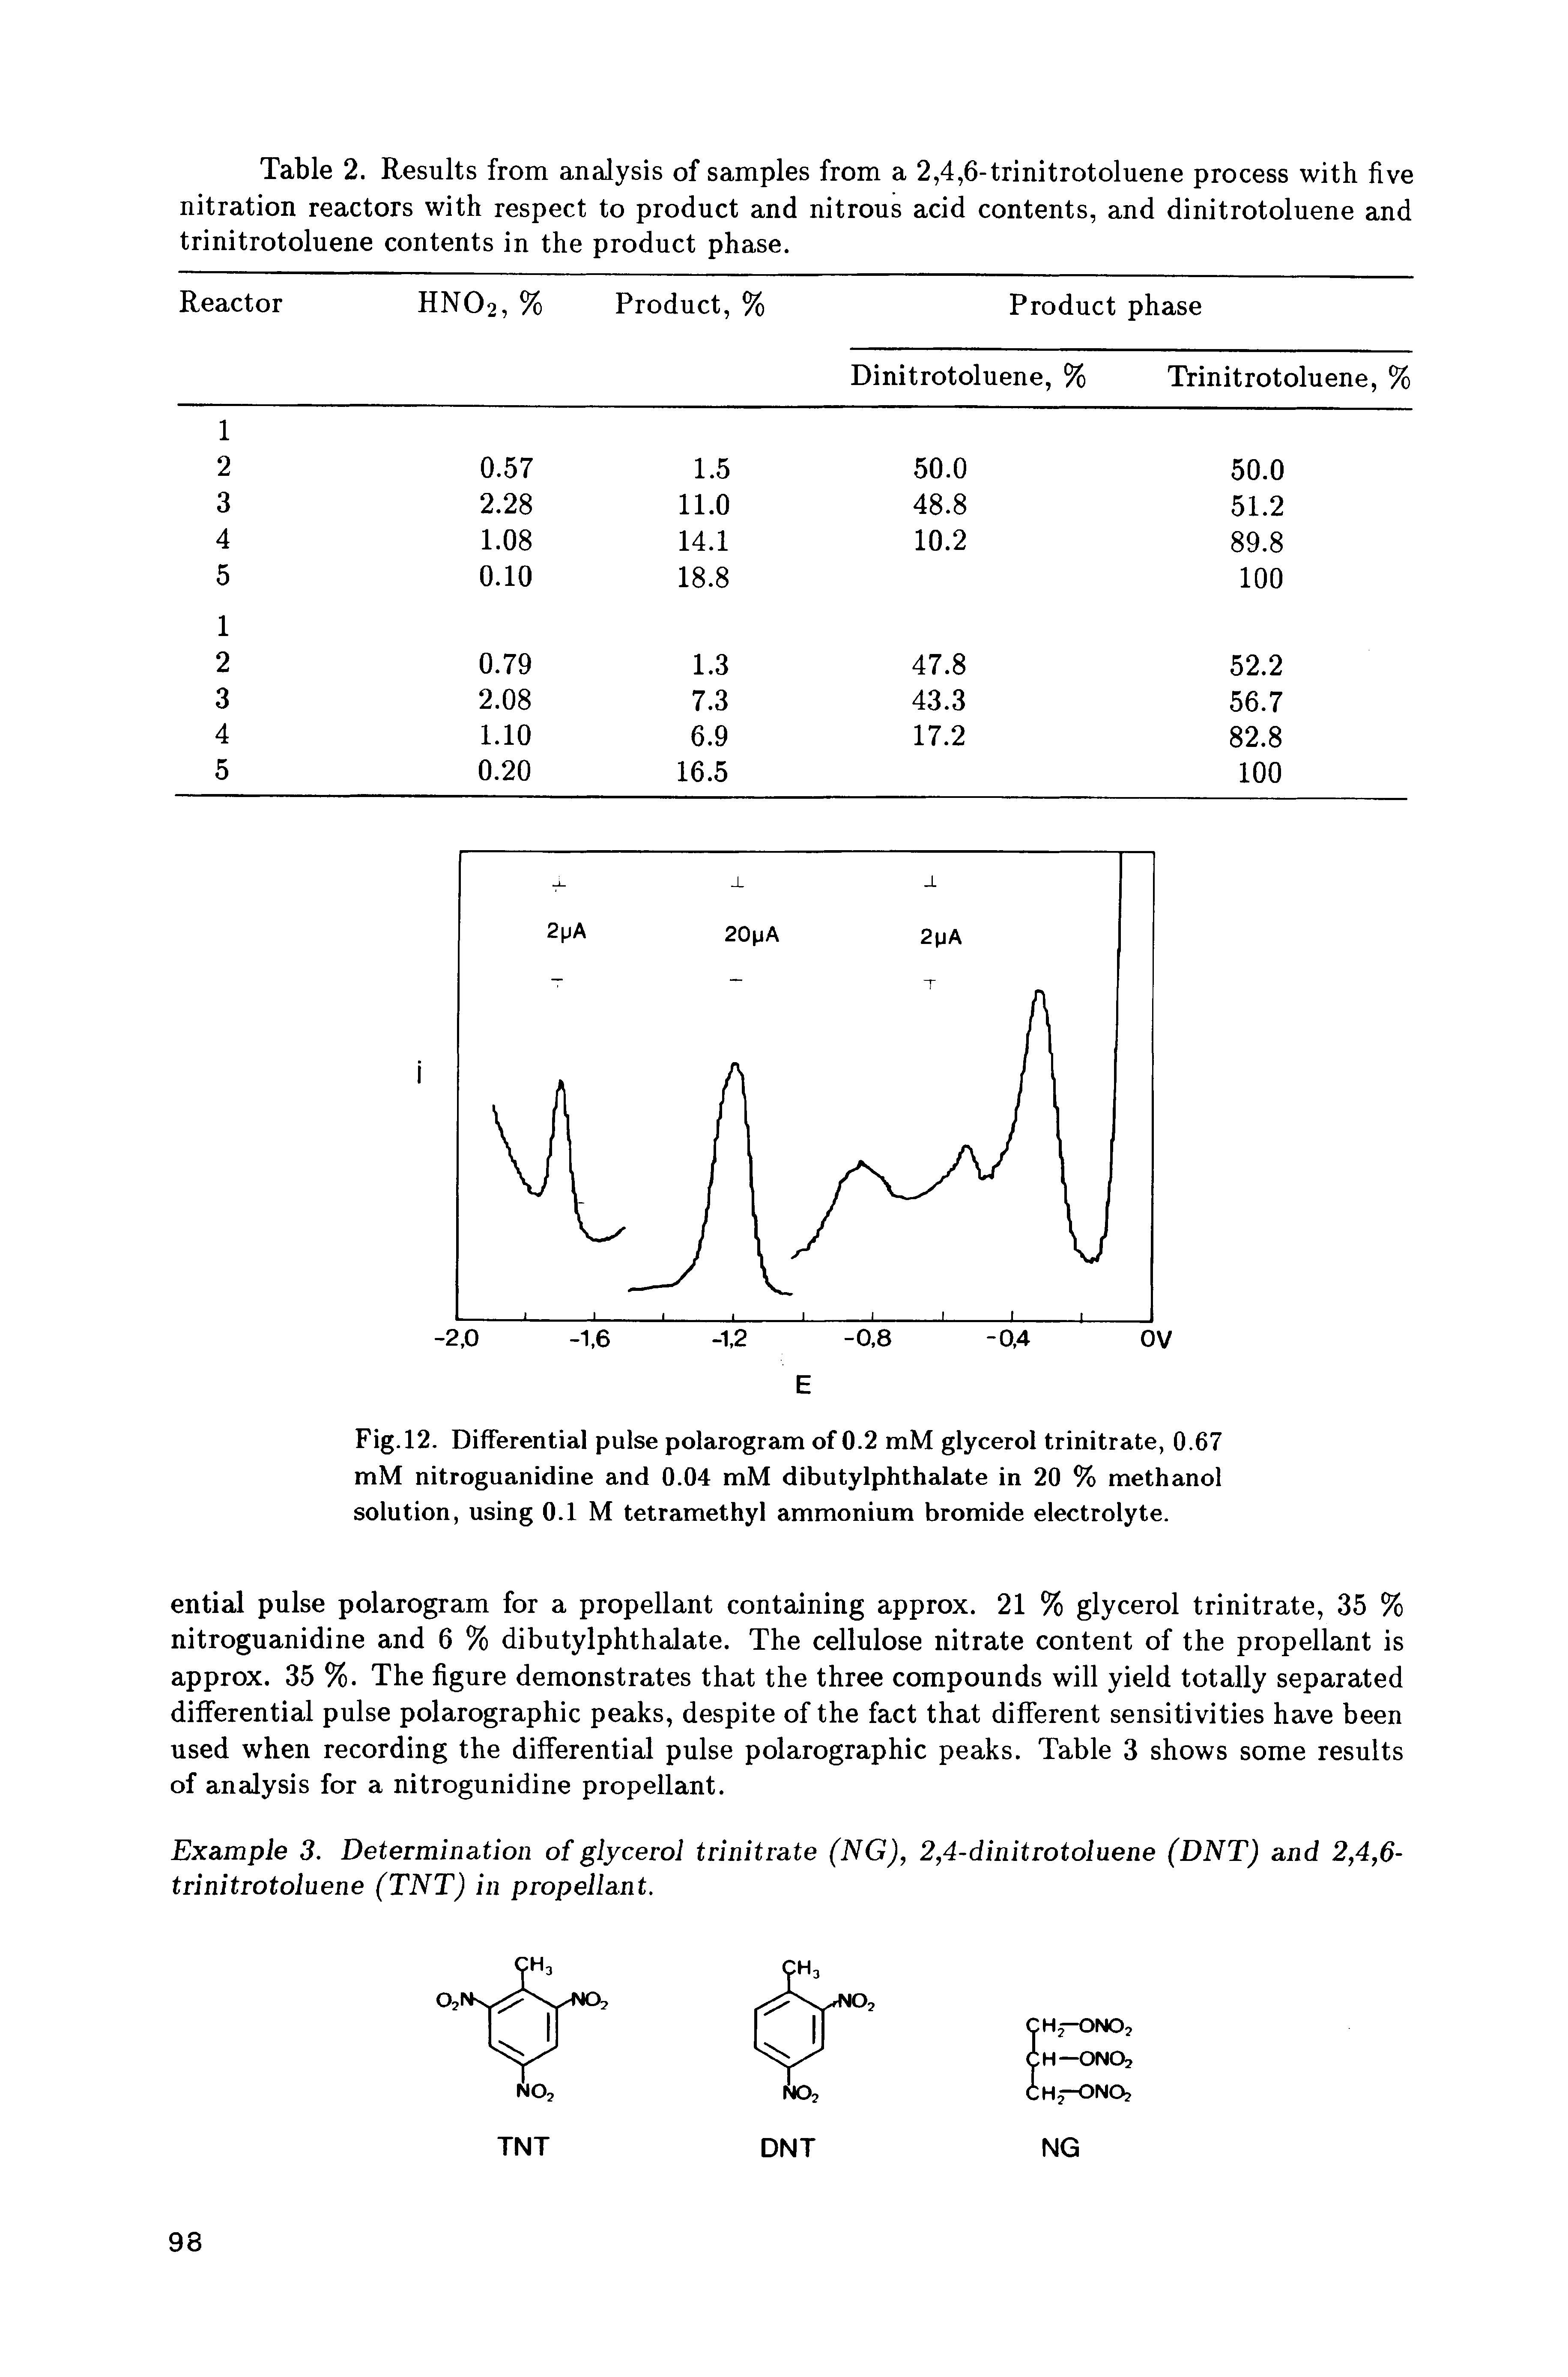 Fig. 12. Differential pulse polarogram of 0.2 mM glycerol trinitrate, 0.67 mM nitroguanidine and 0.04 mM dibutylphthalate in 20 % methanol solution, using 0.1 M tetramethyl ammonium bromide electrolyte.